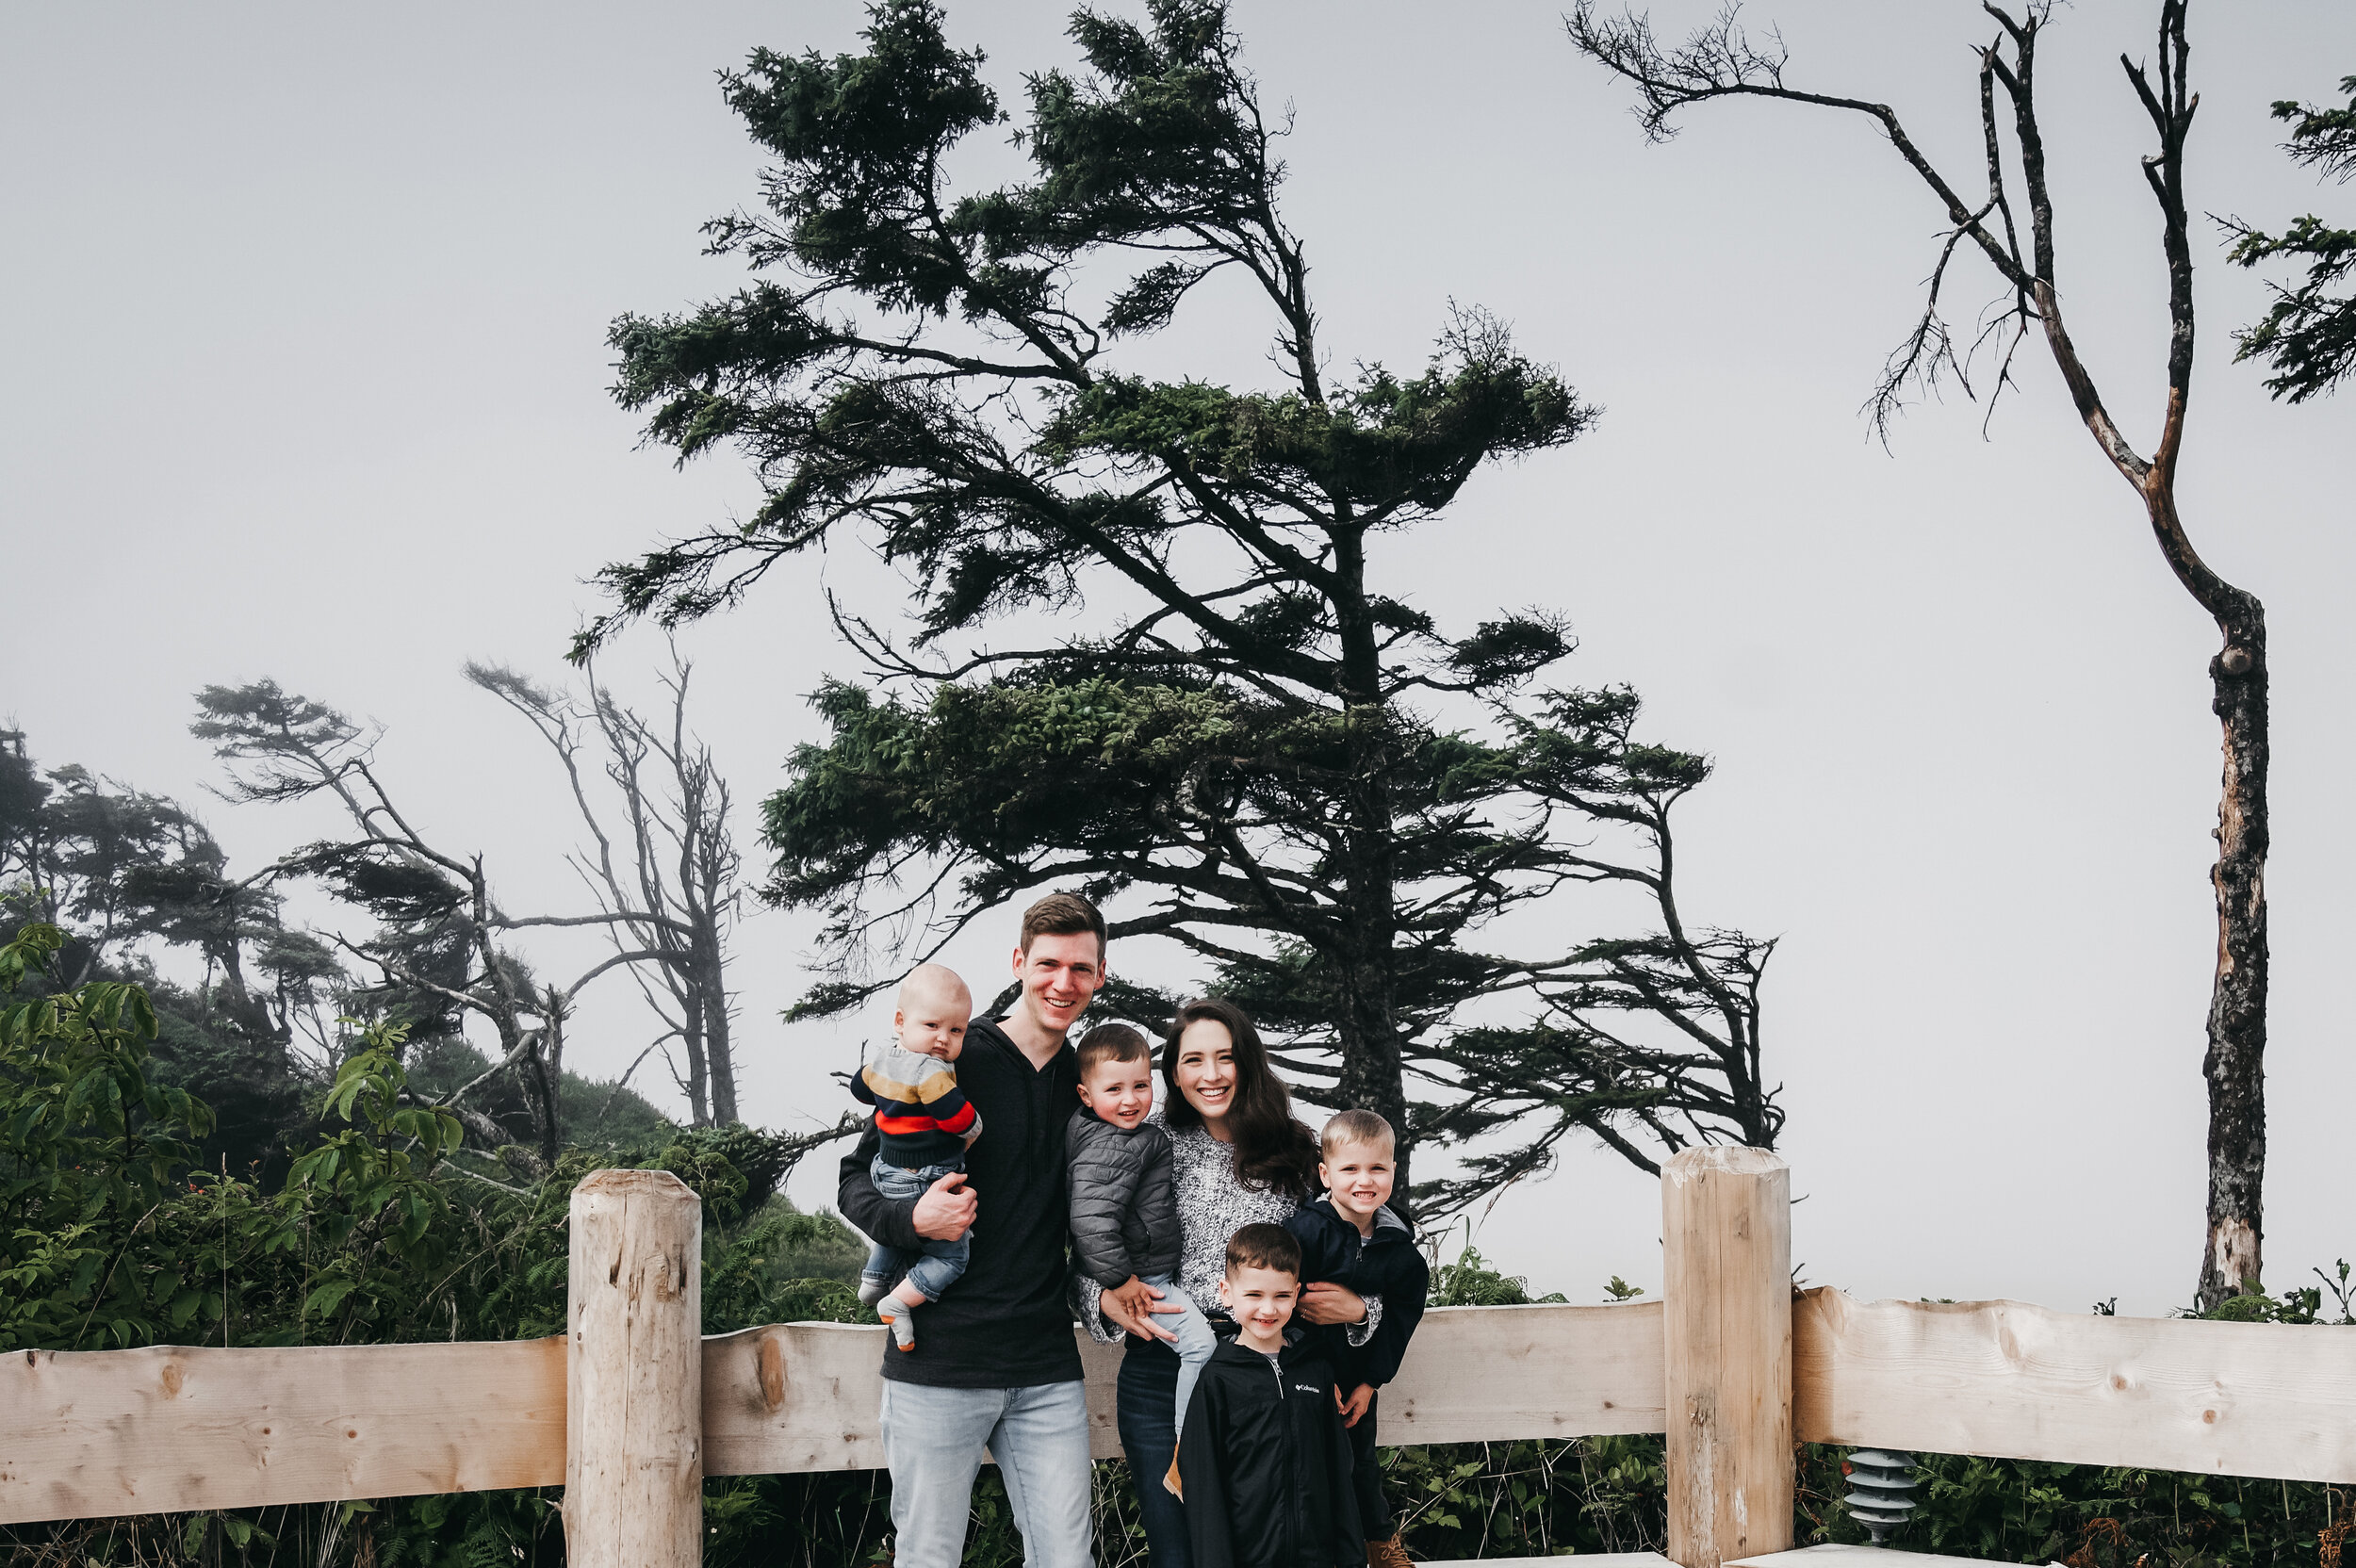 seabrook family photos 2020-13.jpg